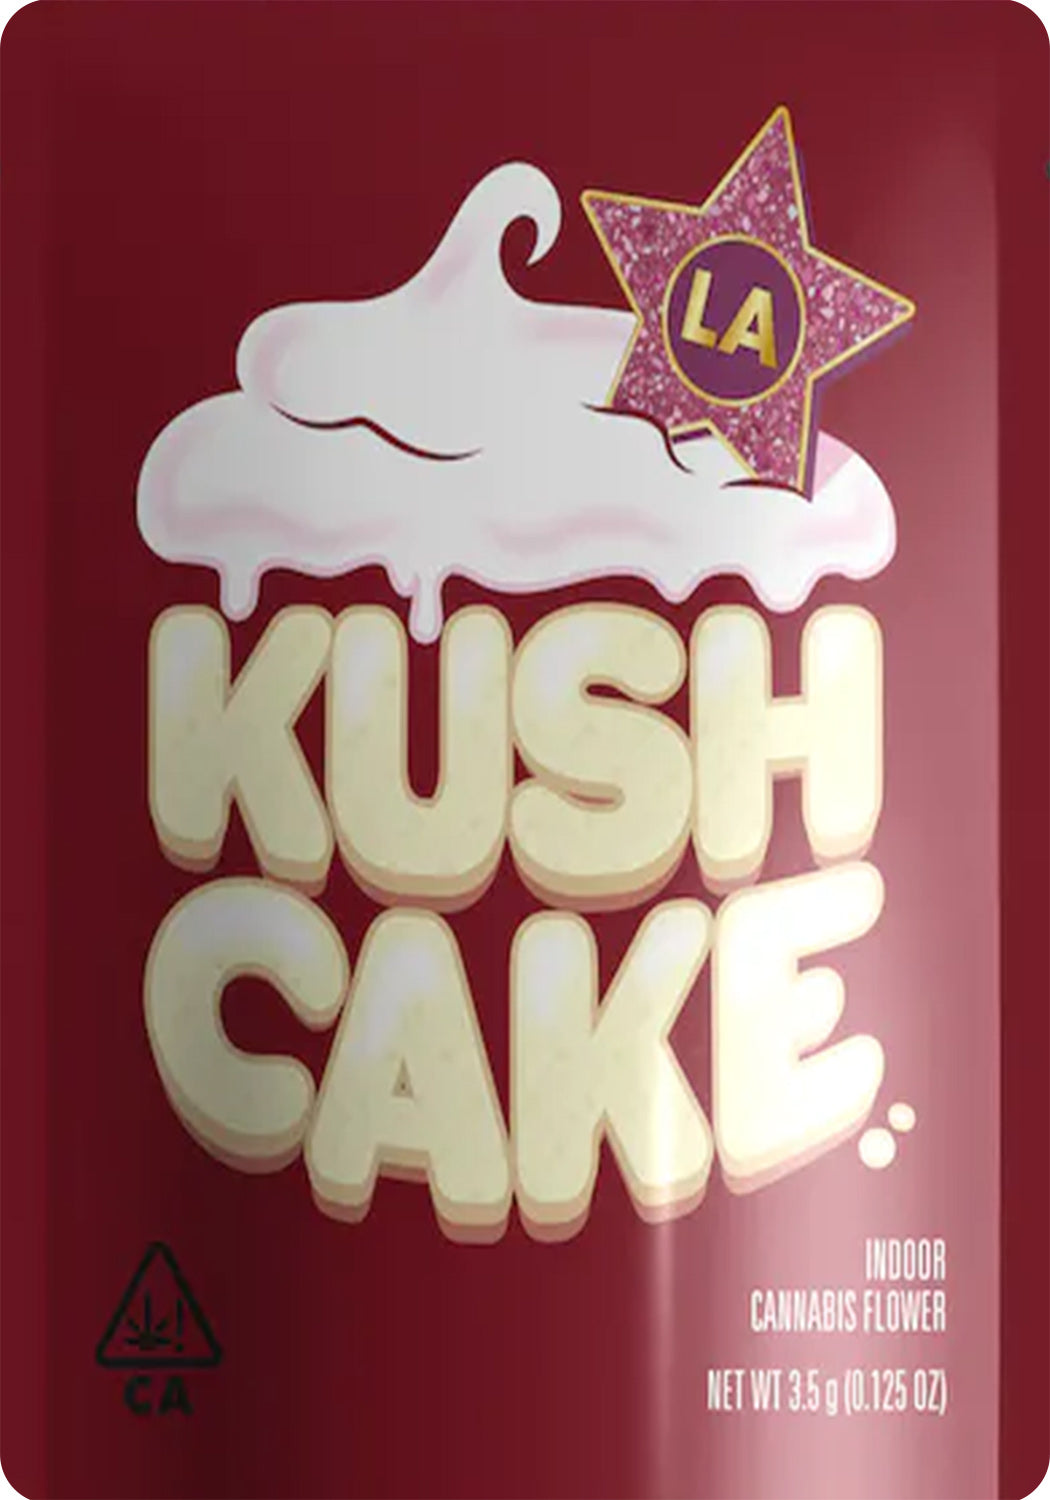 LA Kush Cake Mylar Bags 1g Gram 3.5g Eighth 7g Quarter 28g Oz Ounce 112g Quarter Pound Seed Junky Sticker Bag Fire Mylar